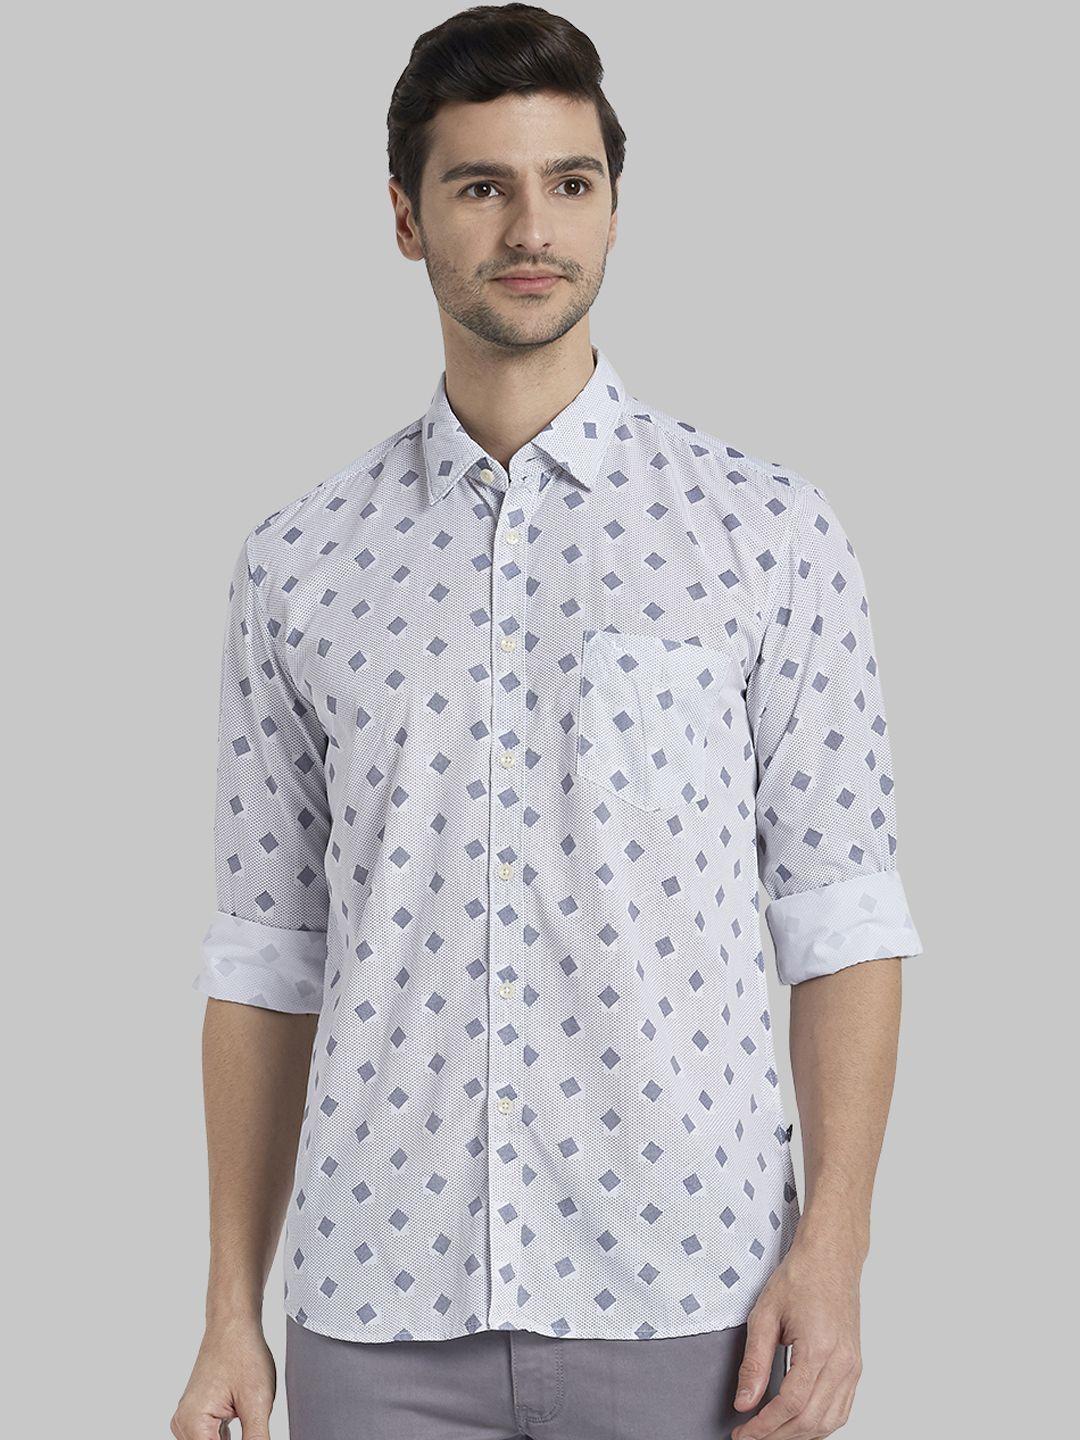 parx-men-white-&-blue-regular-fit-printed-casual-shirt